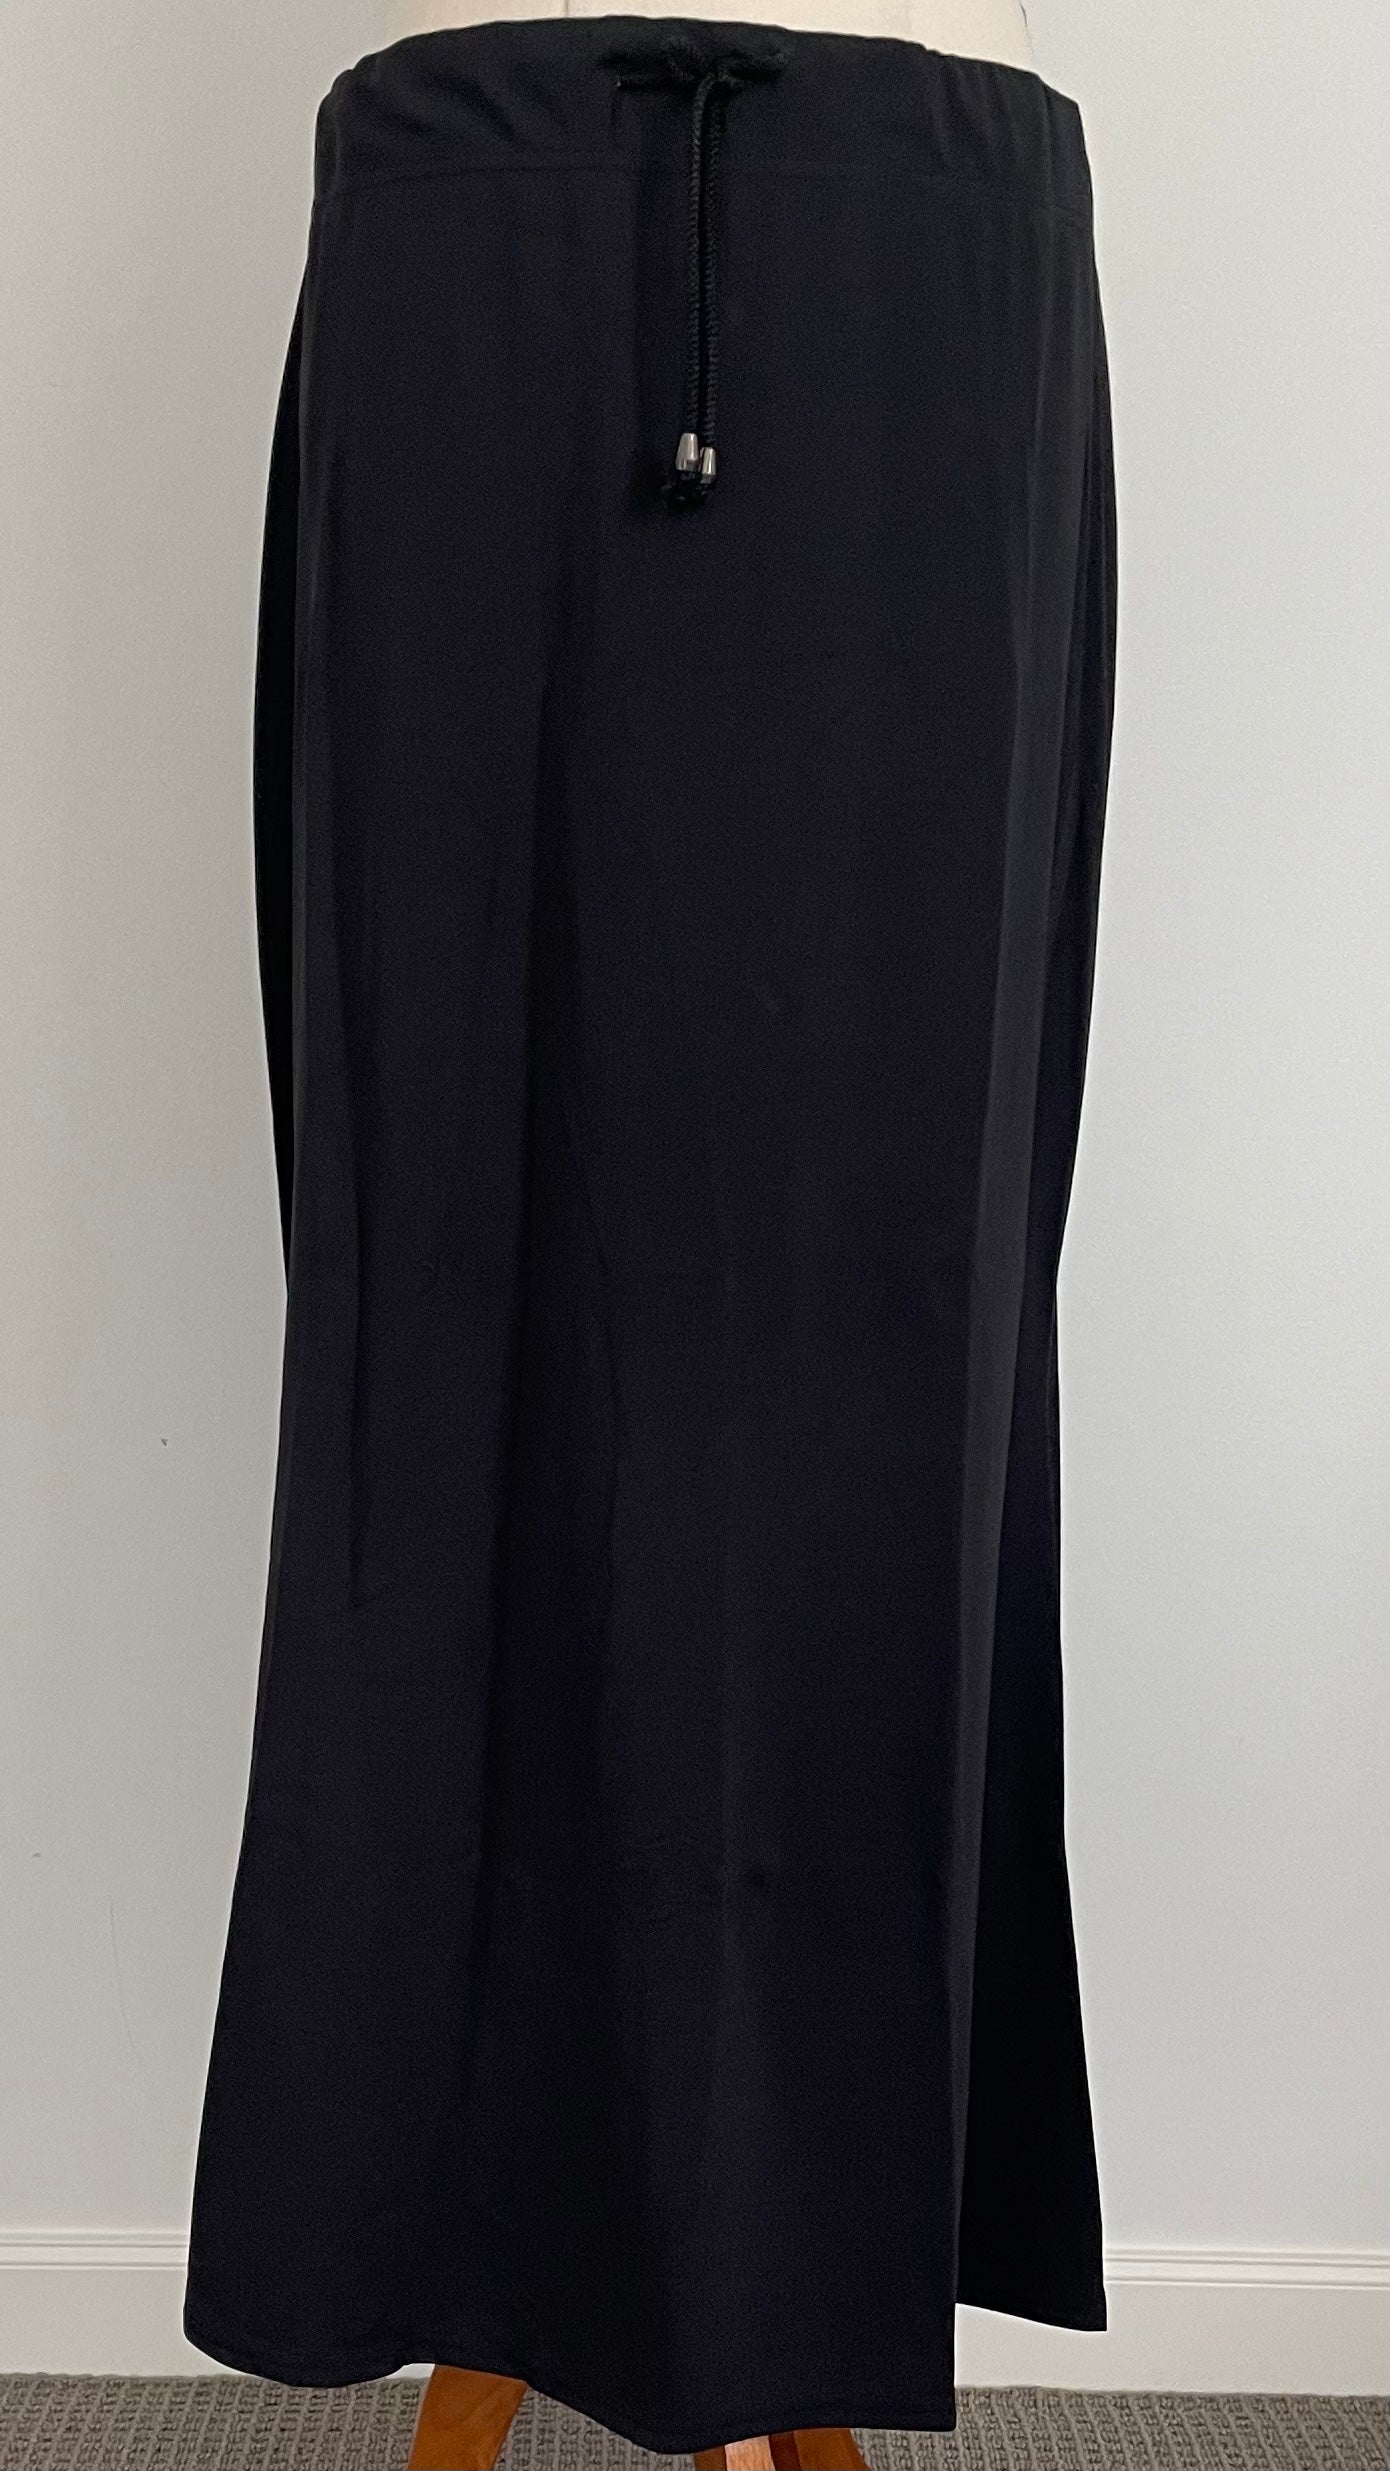 CRAZYBACHAT Women's Saree Petticoat 2 in 1 Petticoat & Shapewear